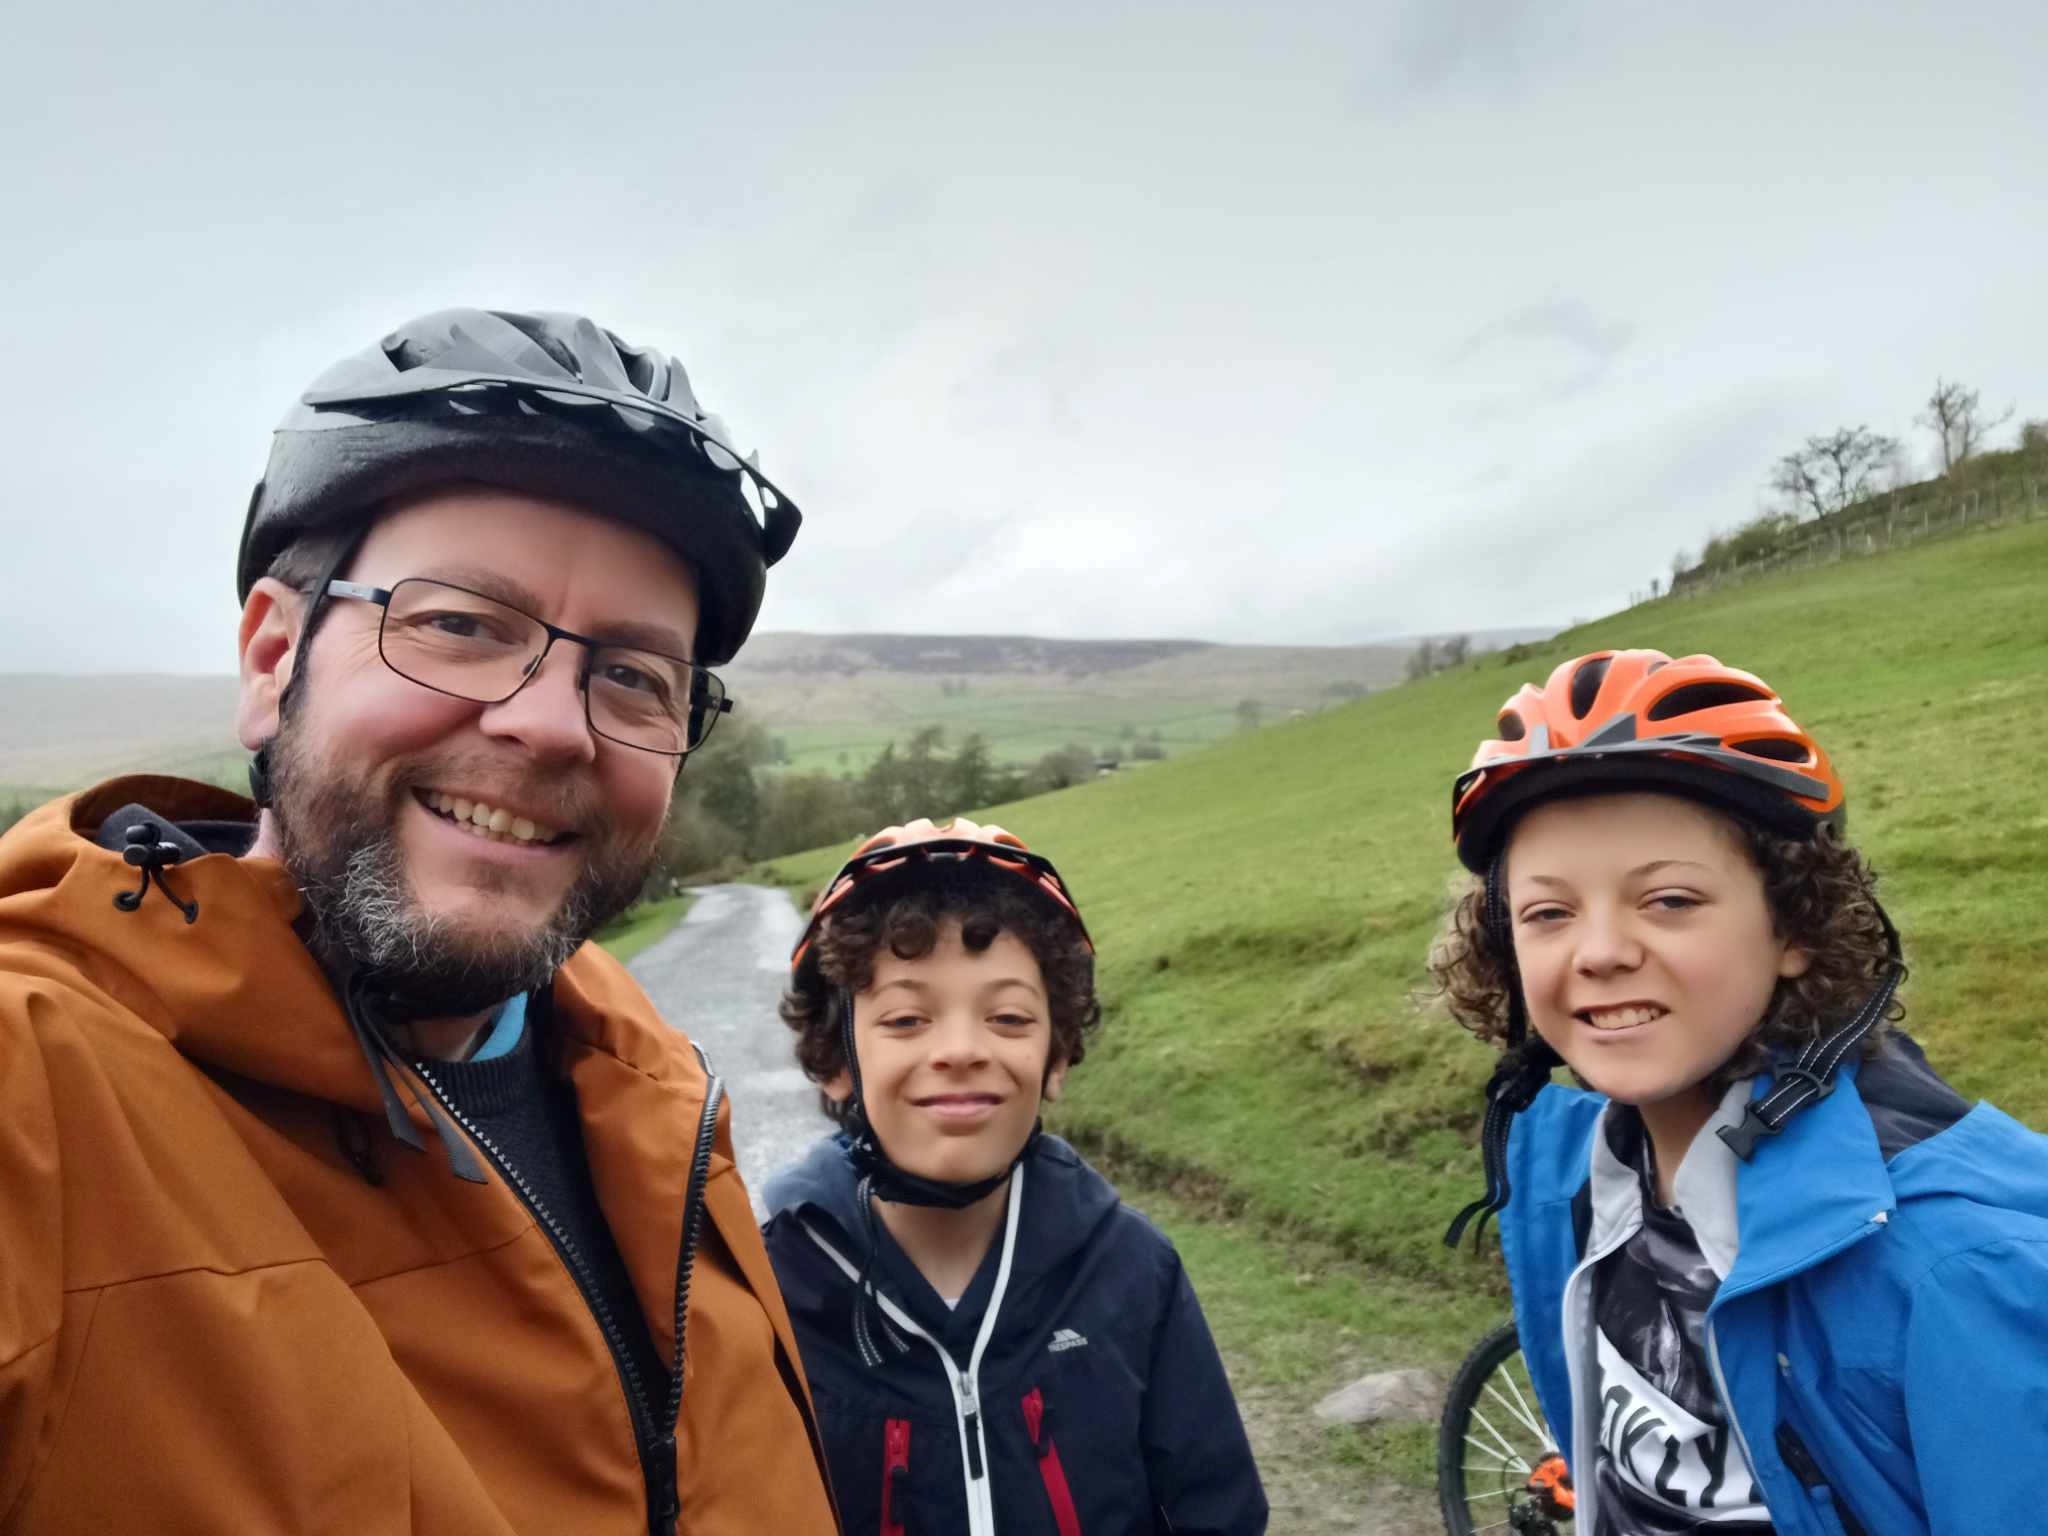 A selfie of David Jones-Stanley with his two children smiling wearing bike helmets.